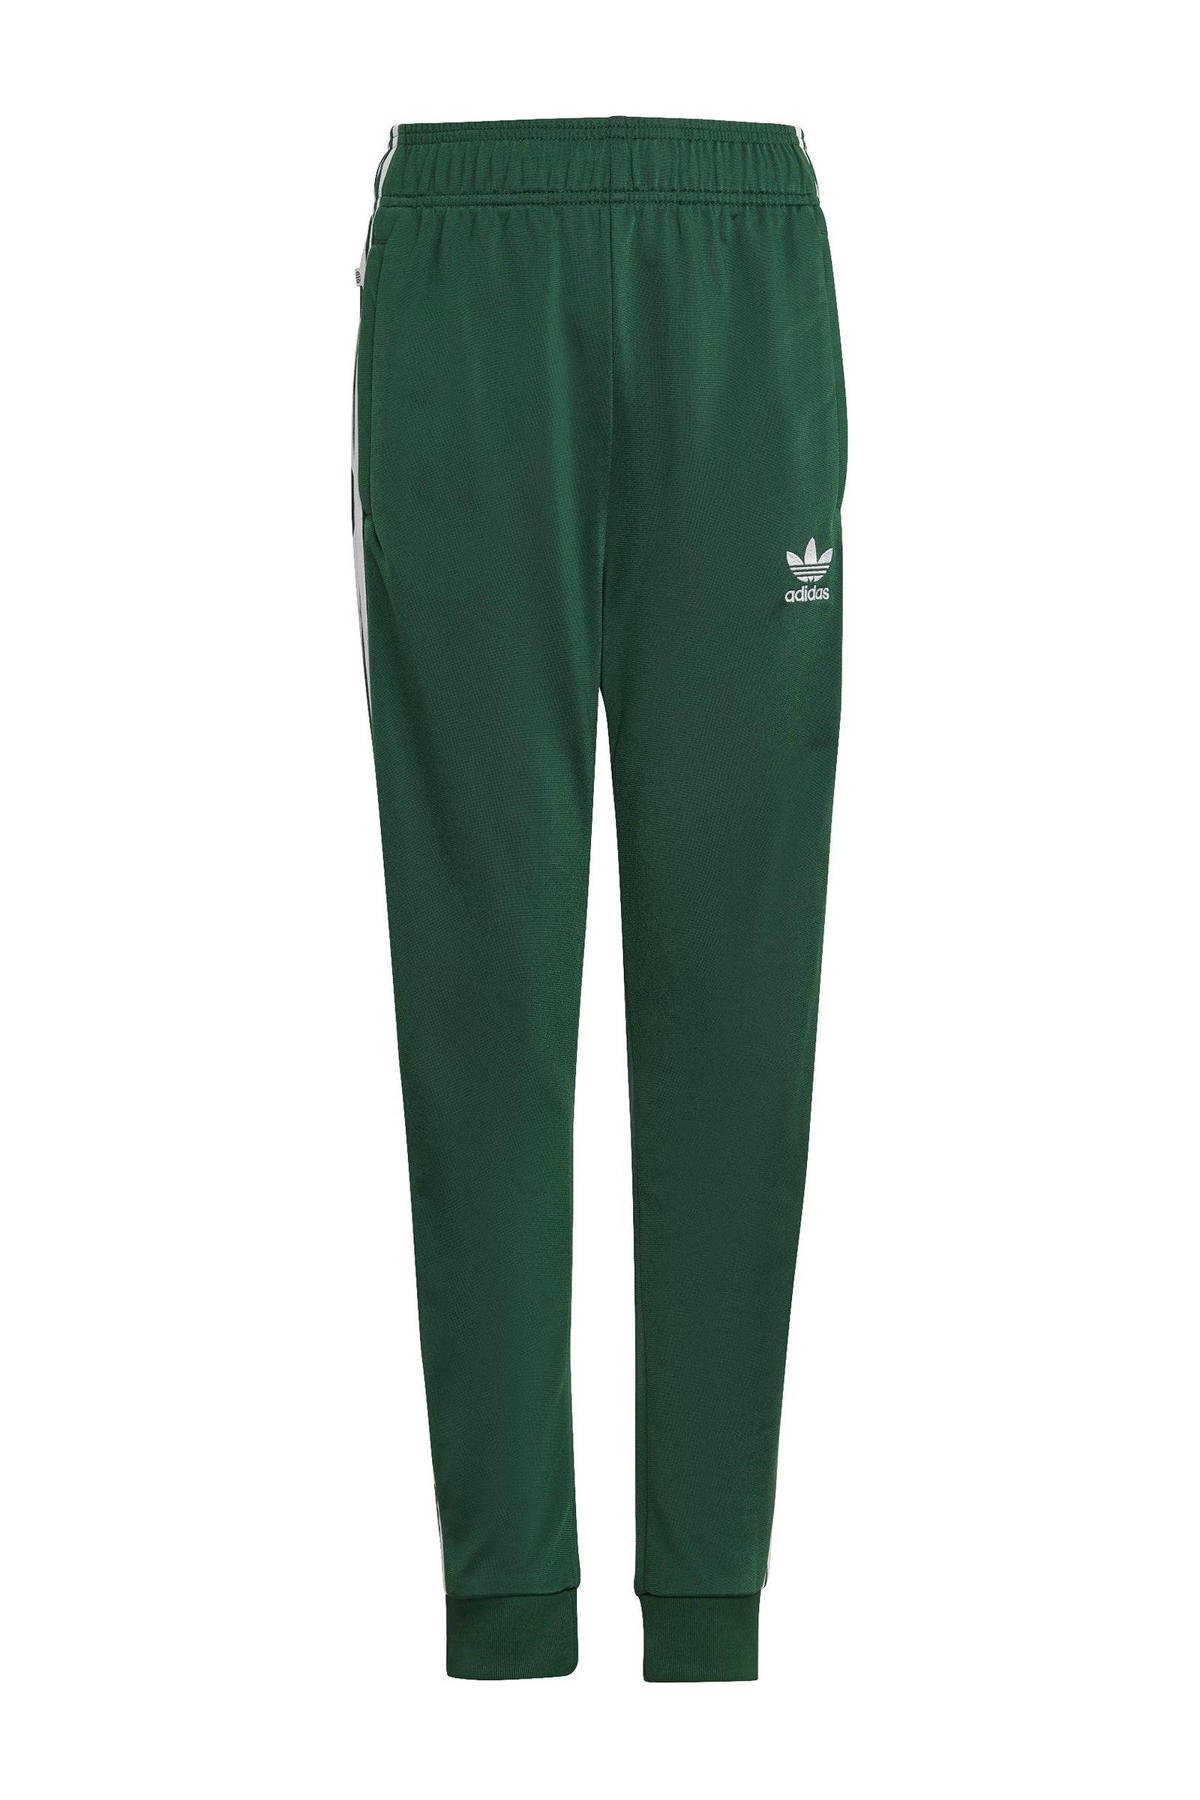 adidas Originals Superstar groen | wehkamp